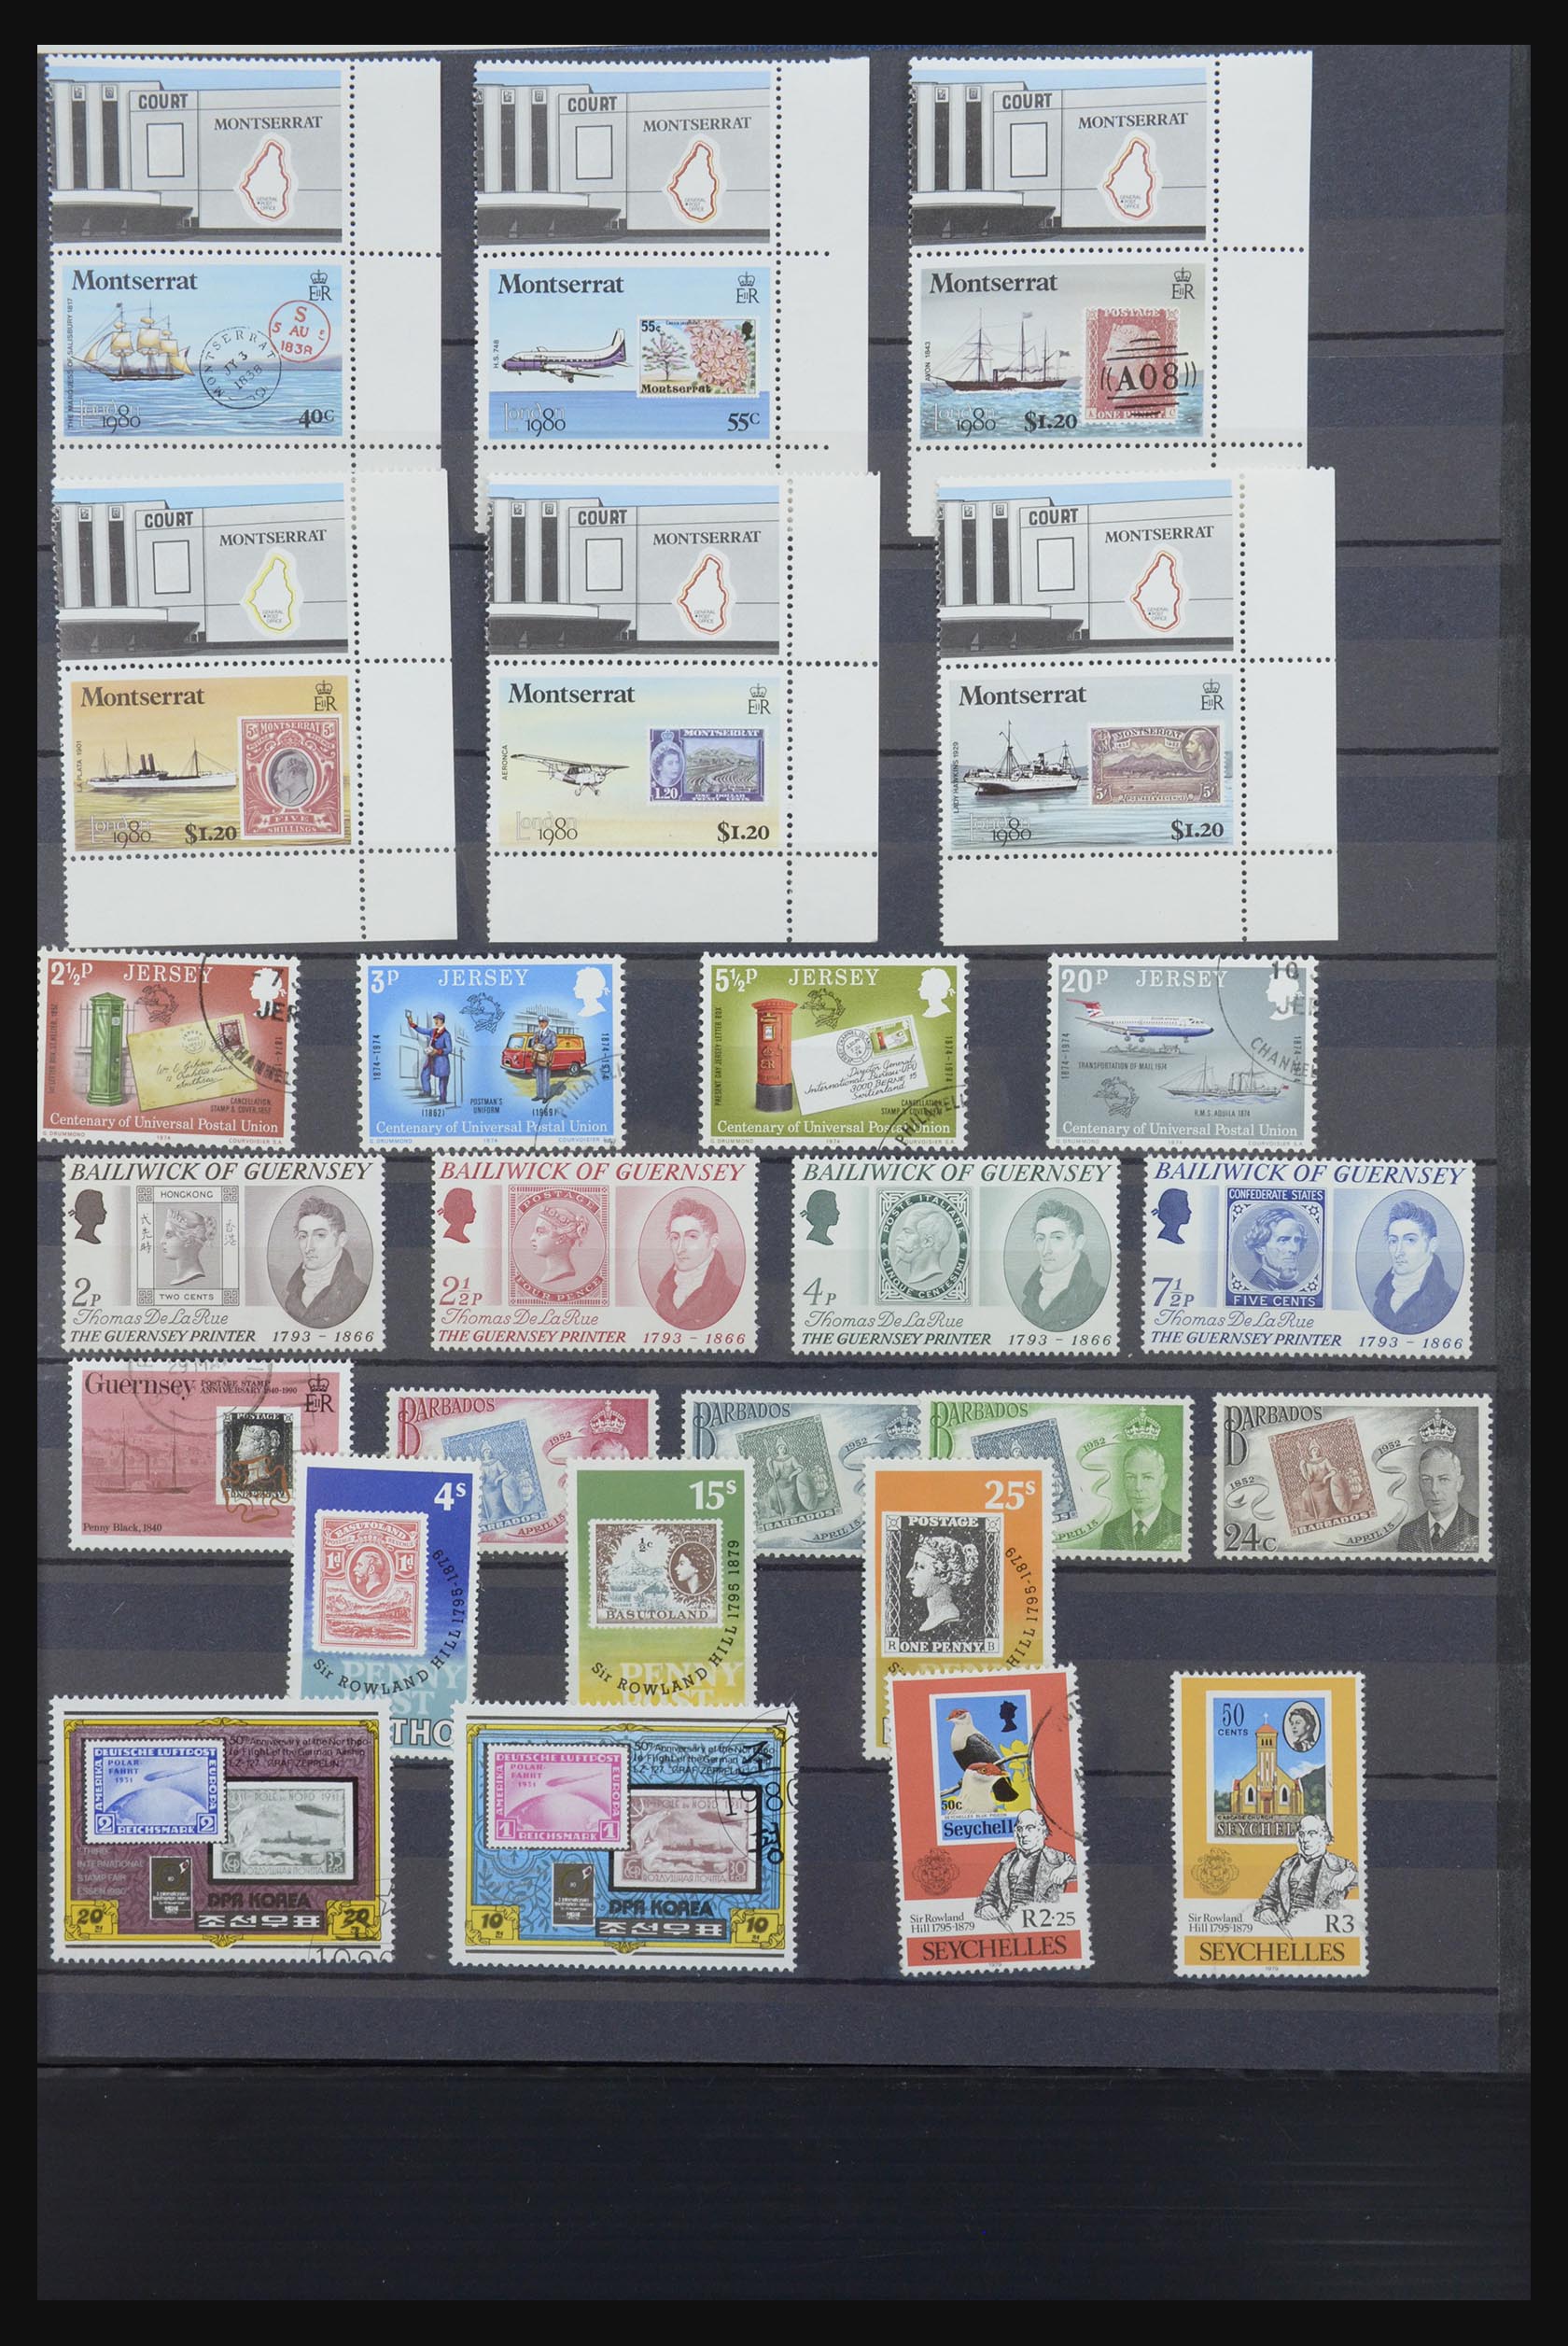 31652 075 - 31652 Motief: postzegel op postzegel 1940-1993.